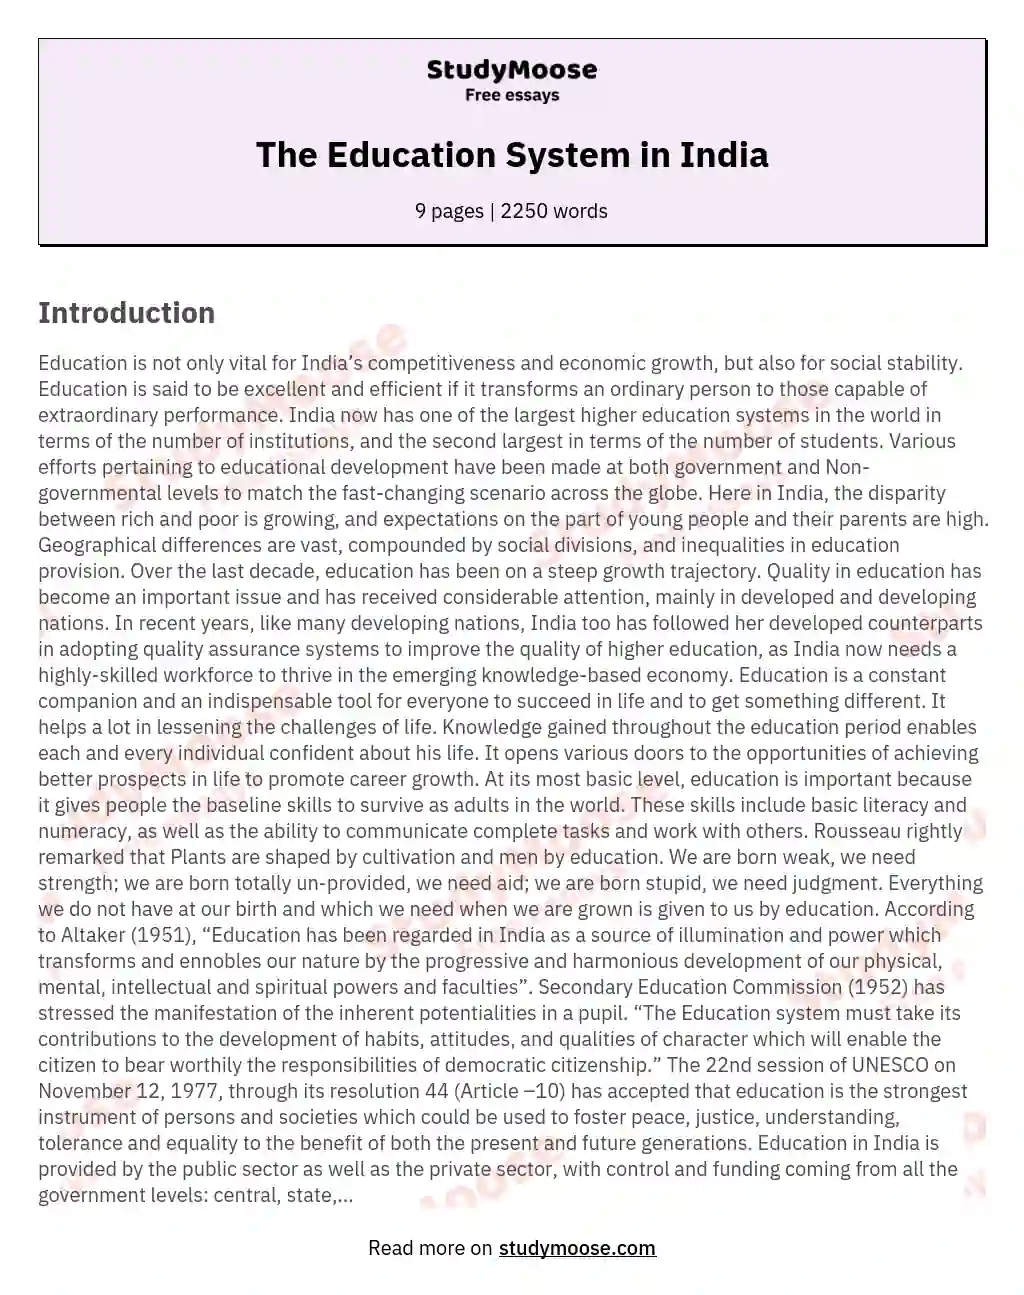 india education essay